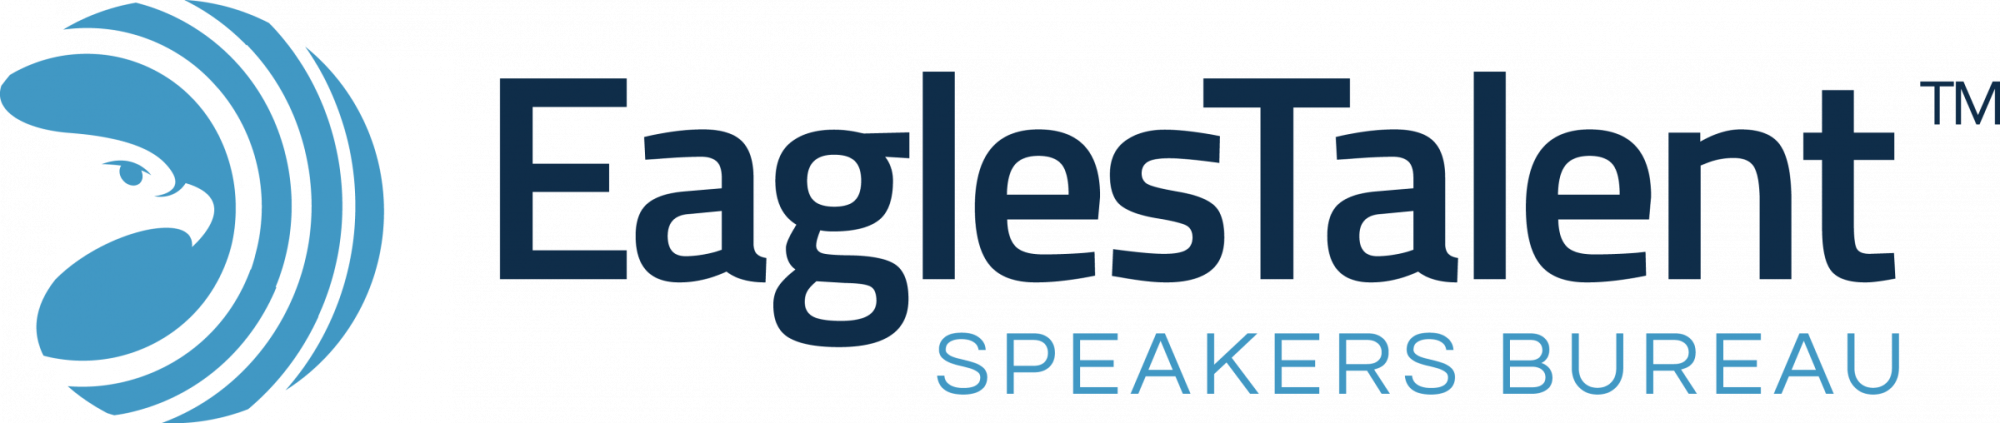 Eagles Talent - Speakers Bureau for Motivational and Inspirational Keynote Speakers